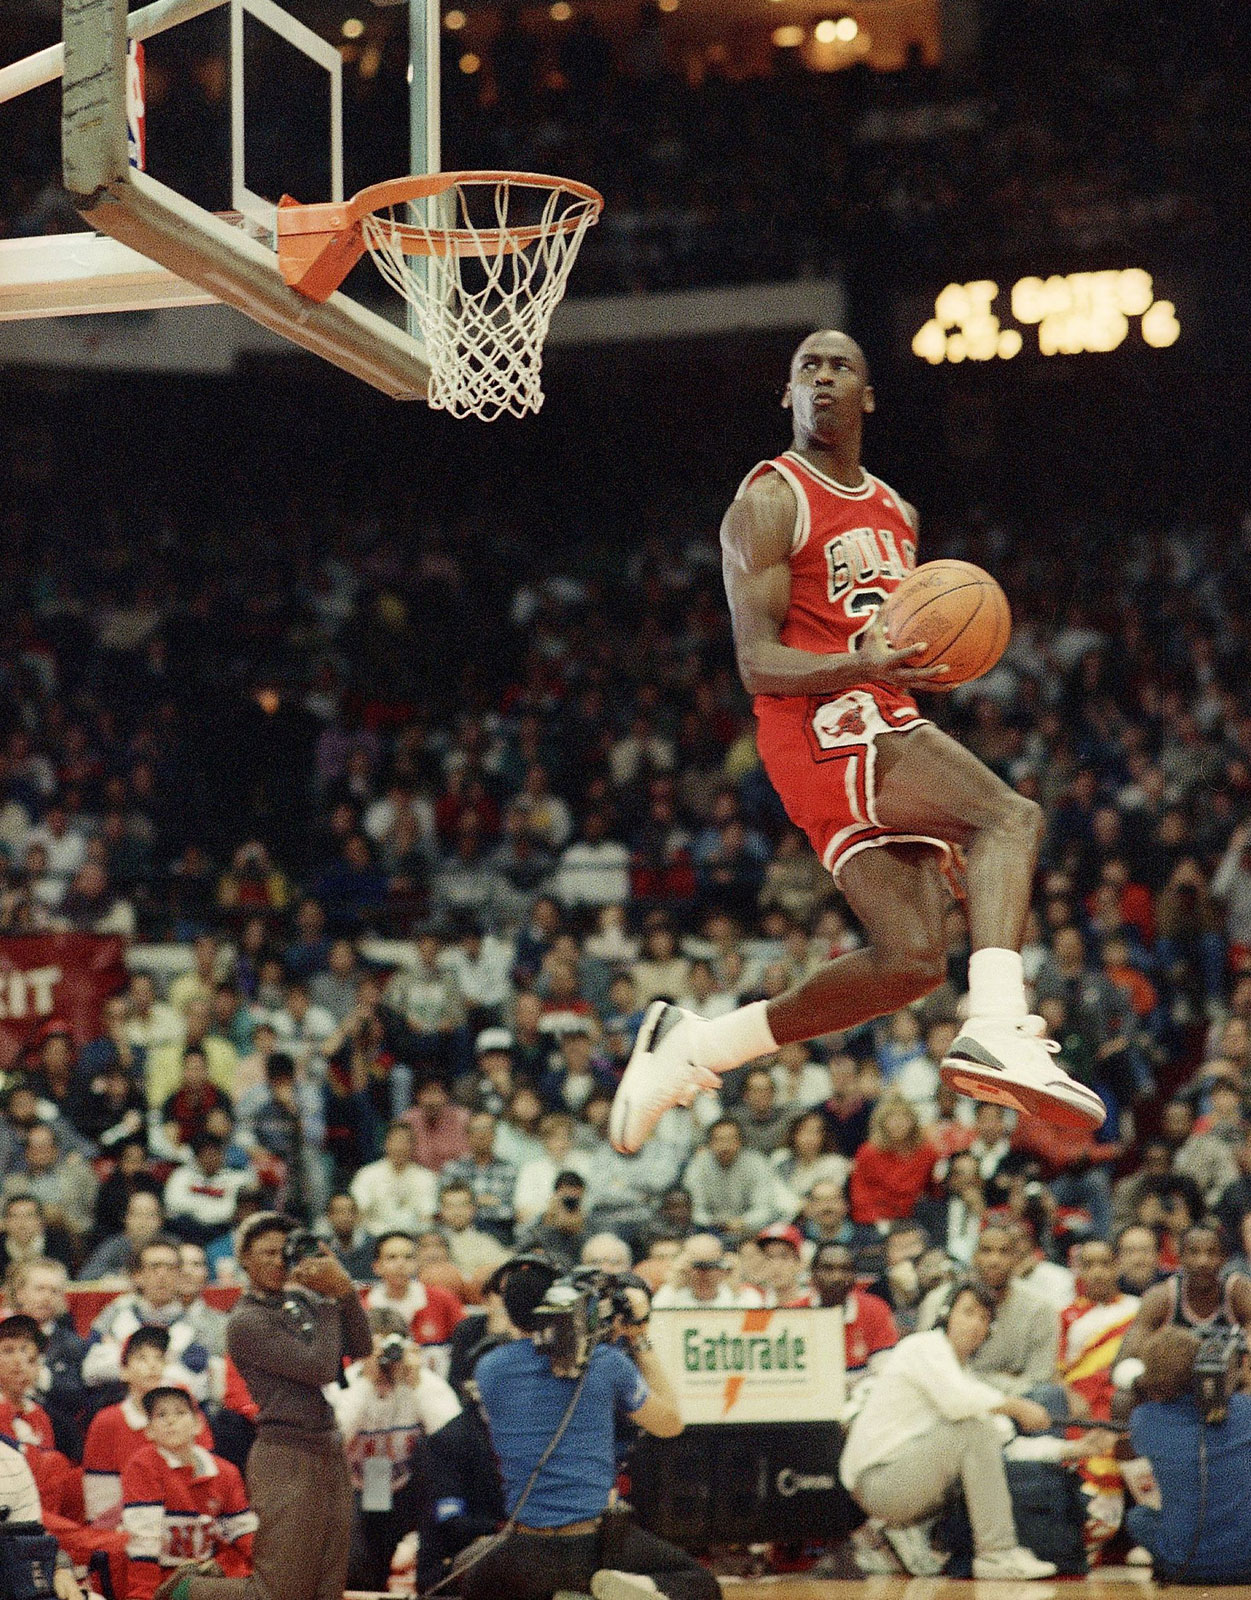 jordan 1988 slam dunk contest shoes